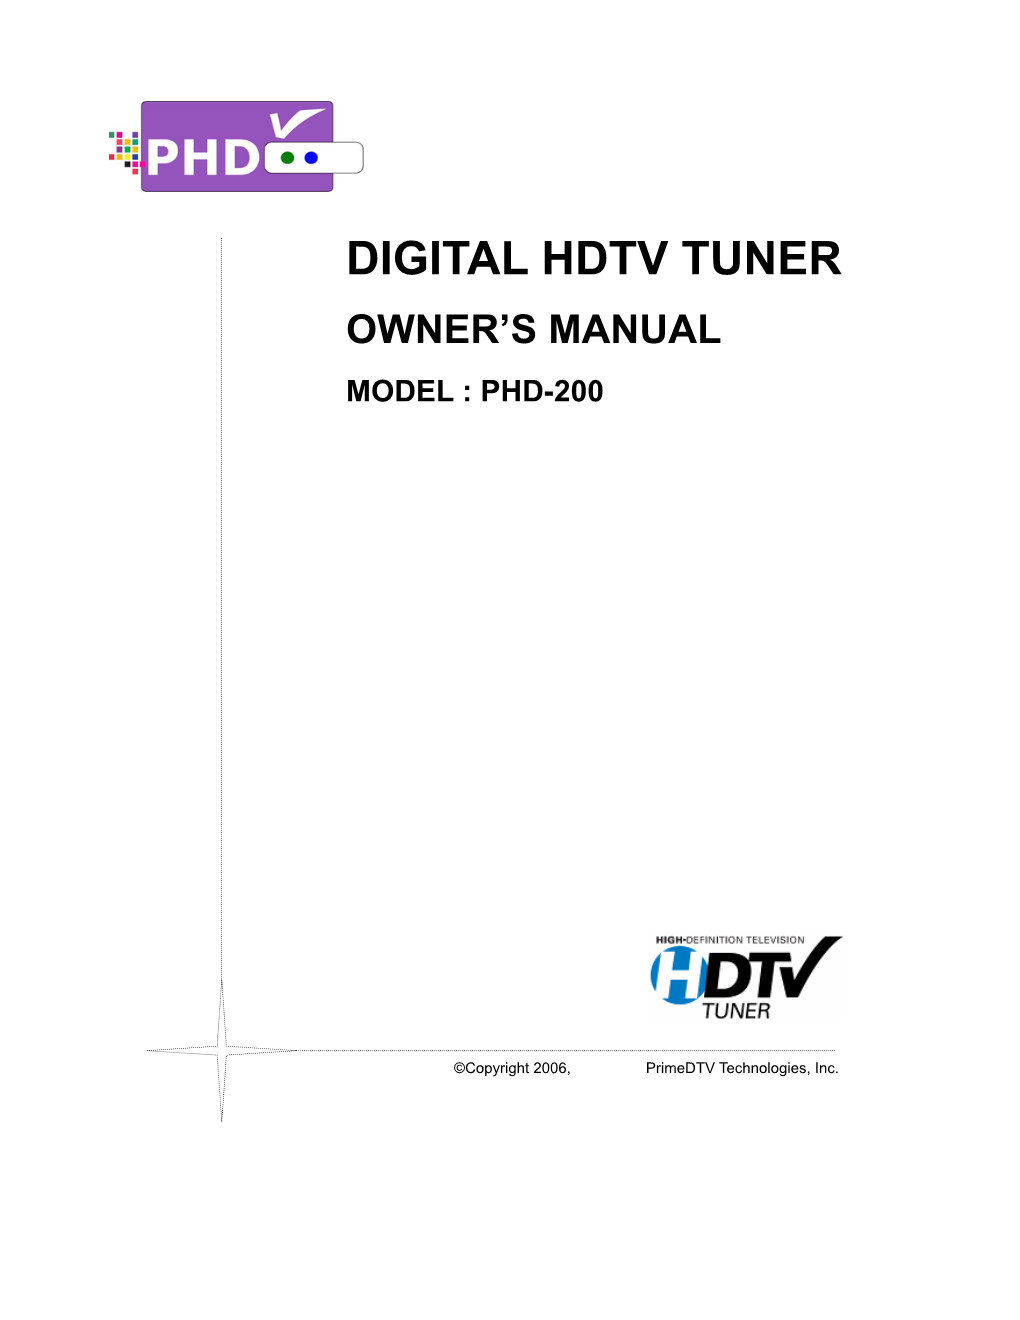 Digital Hdtv Tuner Owner's Manual Model : Phd-200